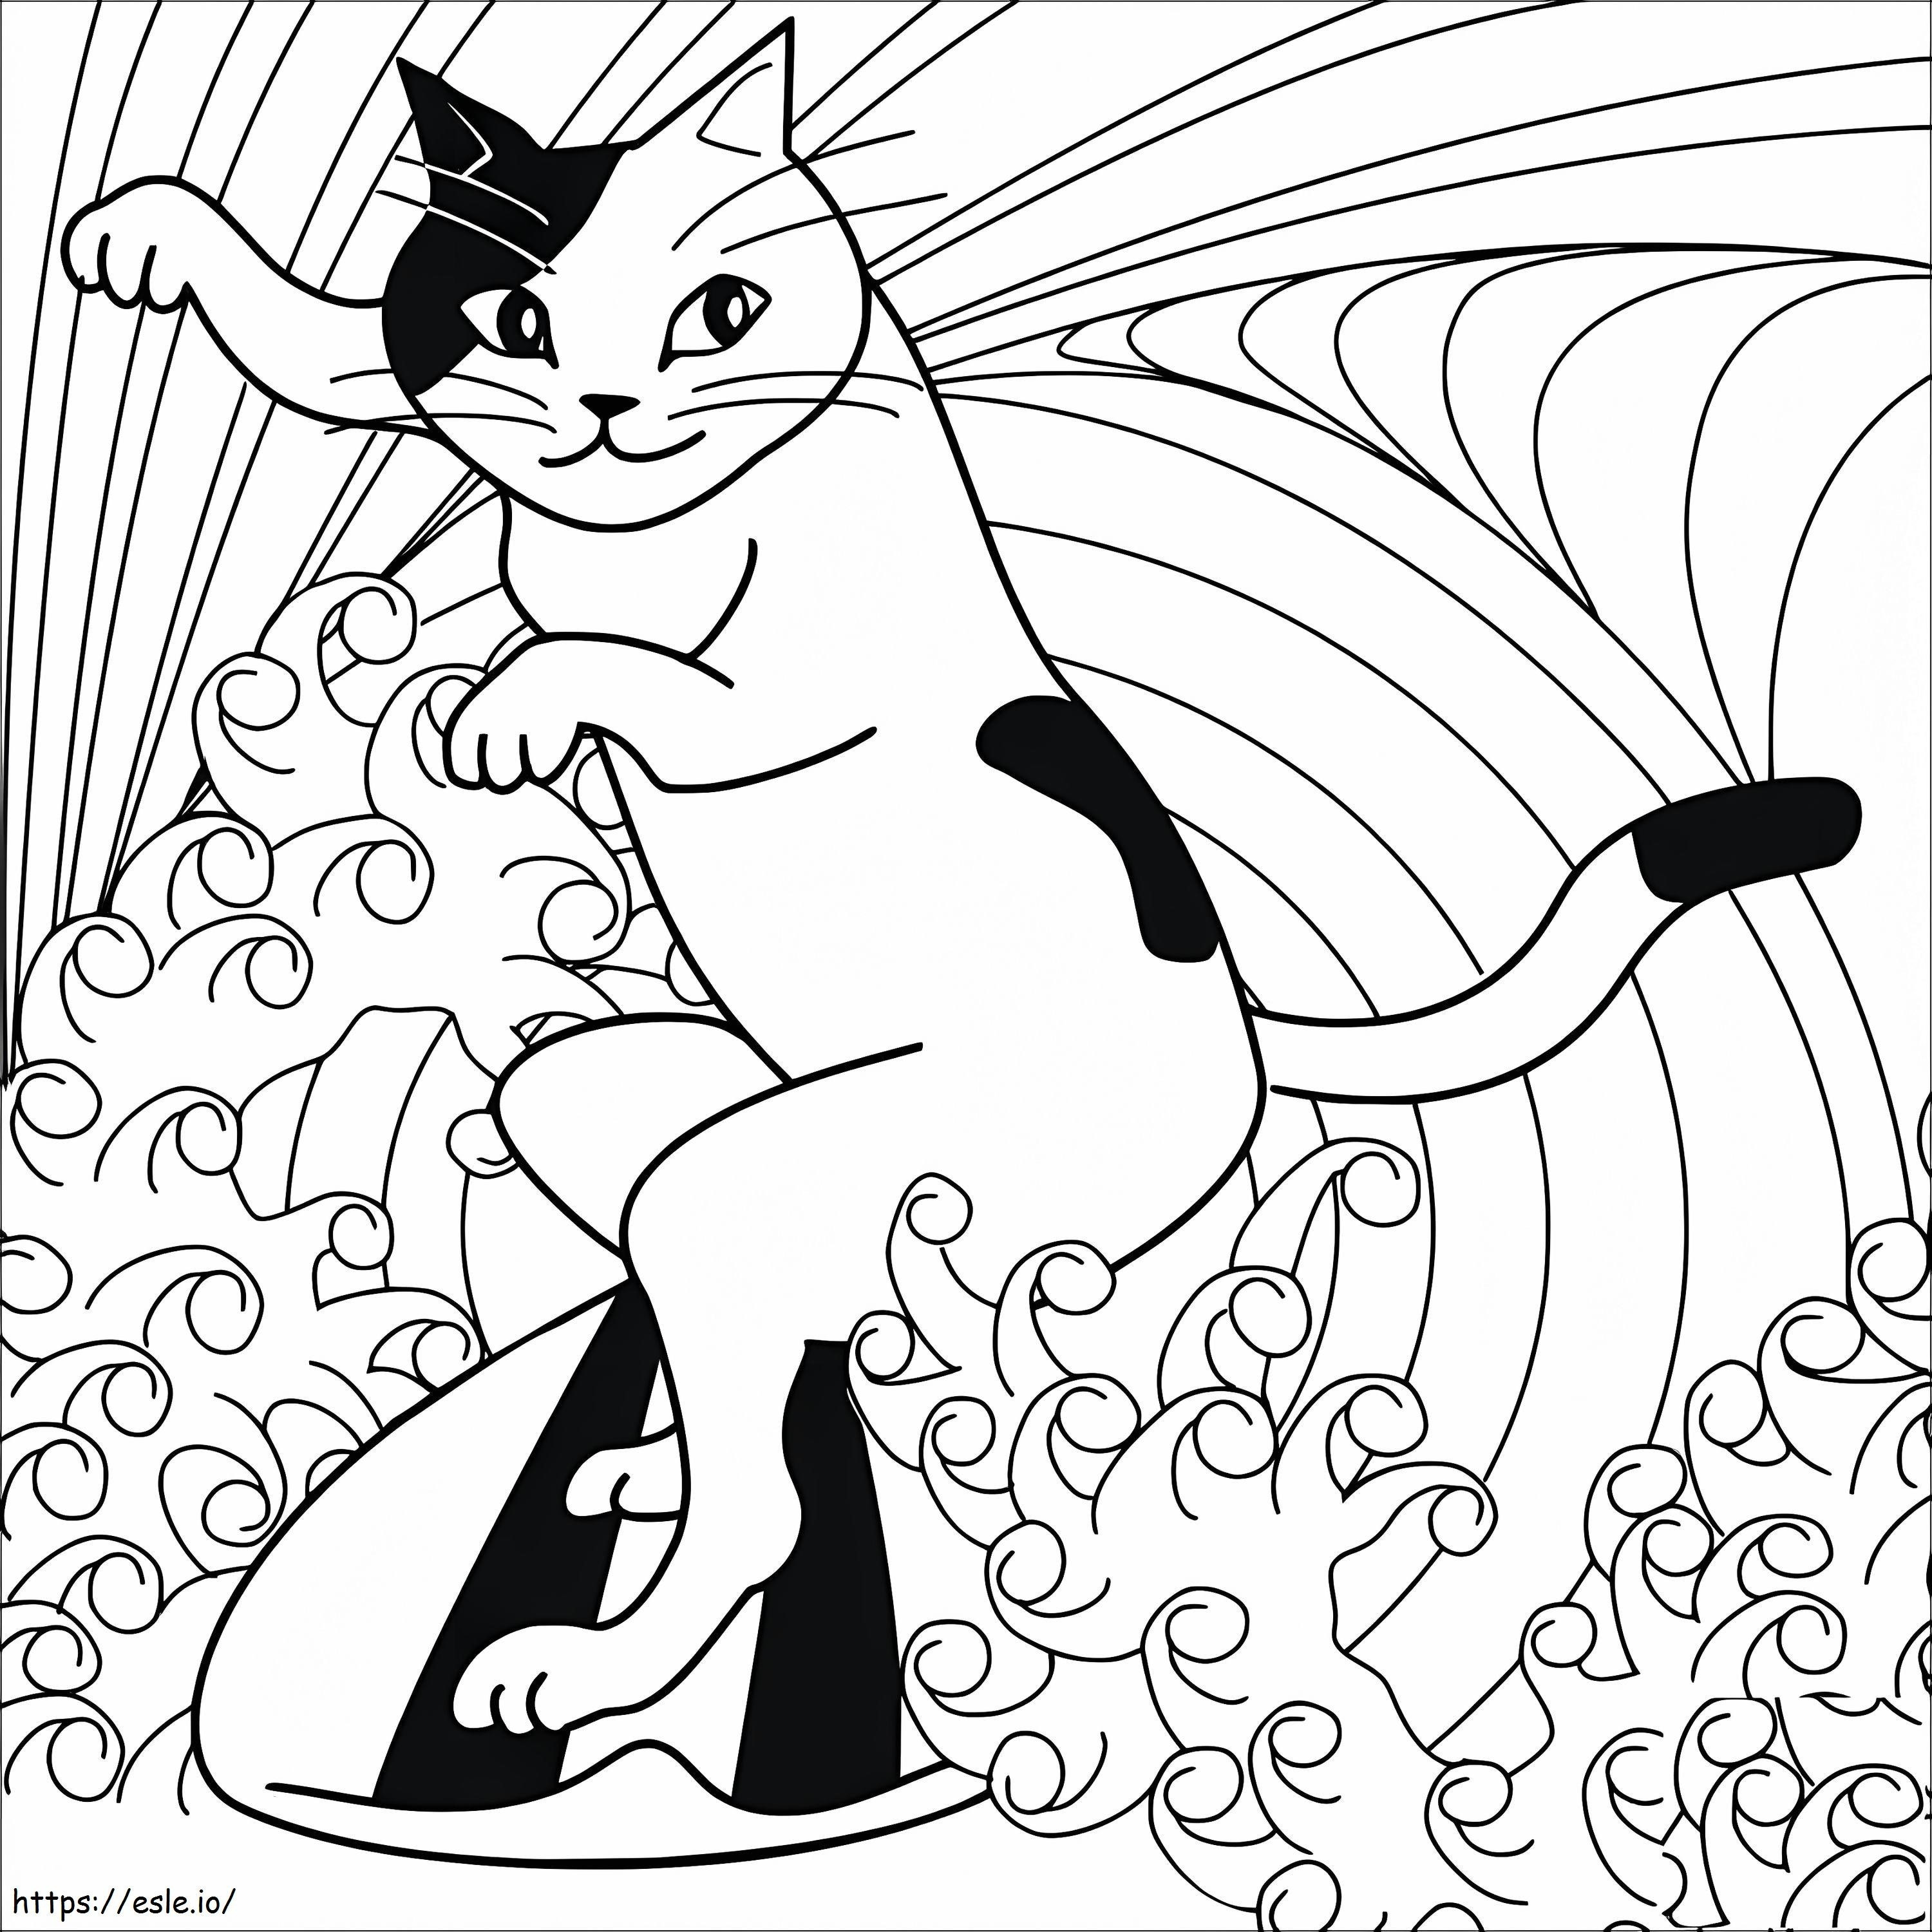 Surfujący kot kolorowanka